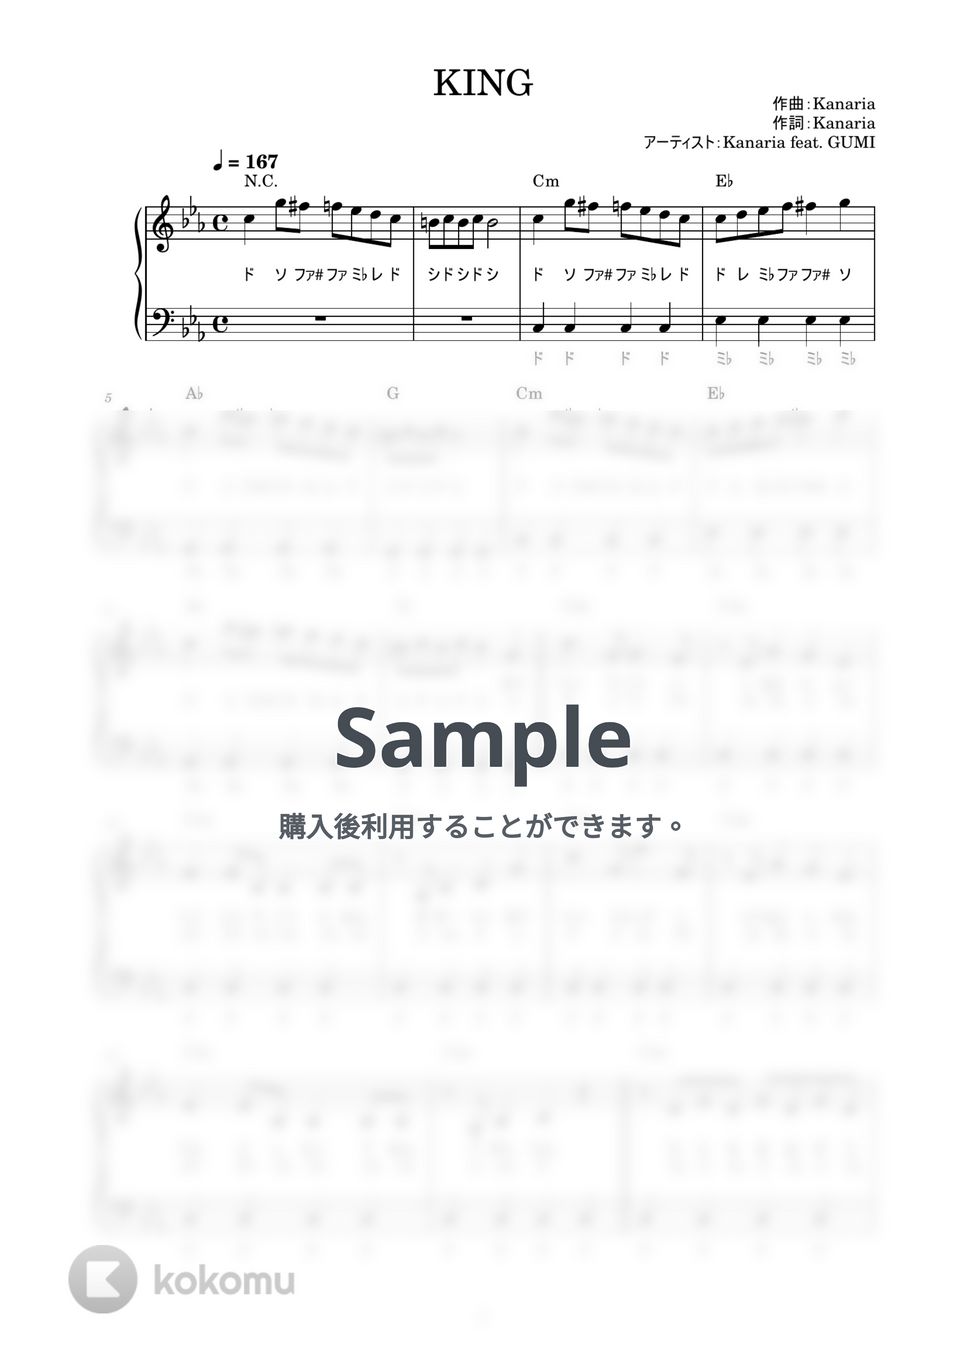 Kanaria feat. GUMI - KING (かんたん / 歌詞付き / ドレミ付き / 初心者) by piano.tokyo